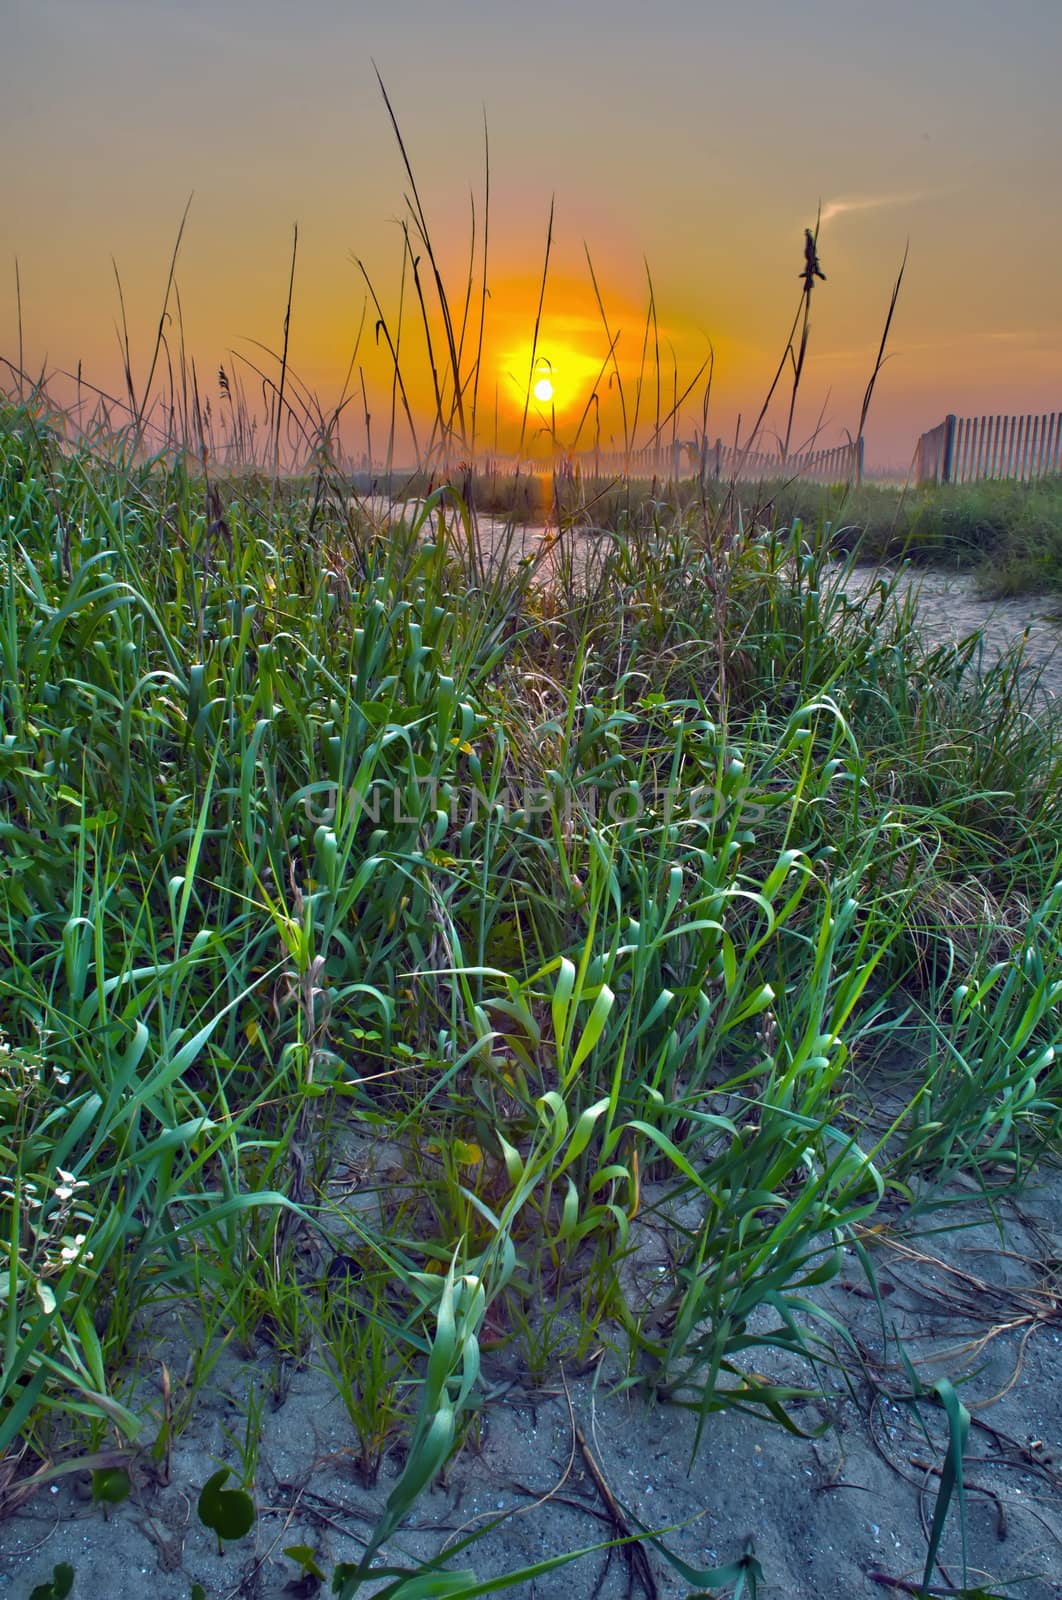 sunrise at myrtle beach by digidreamgrafix